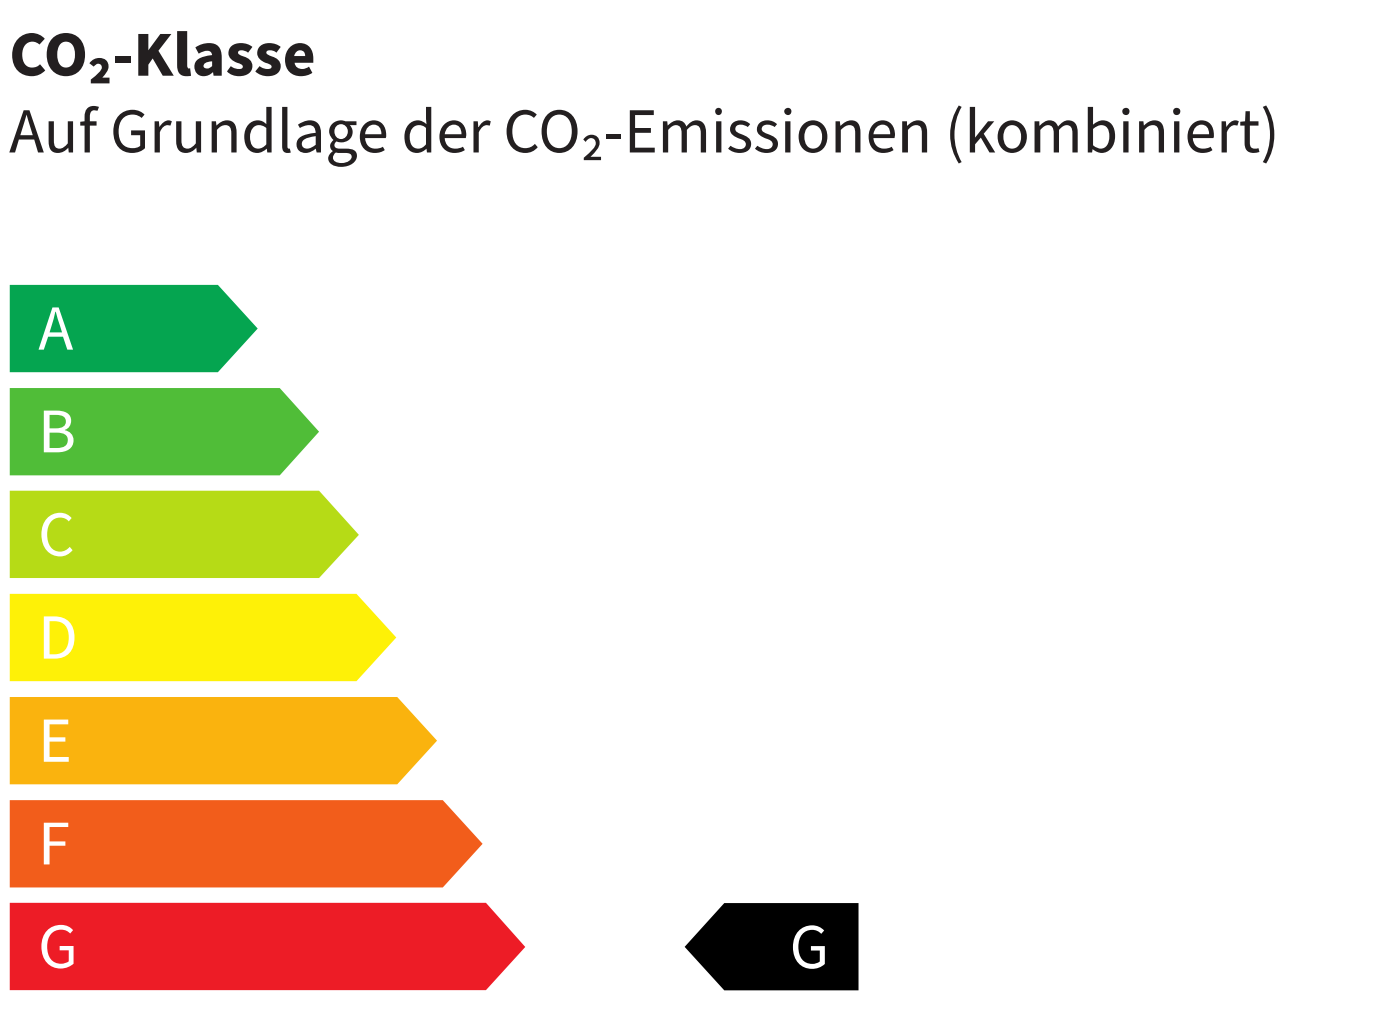 CO2-Klasse G